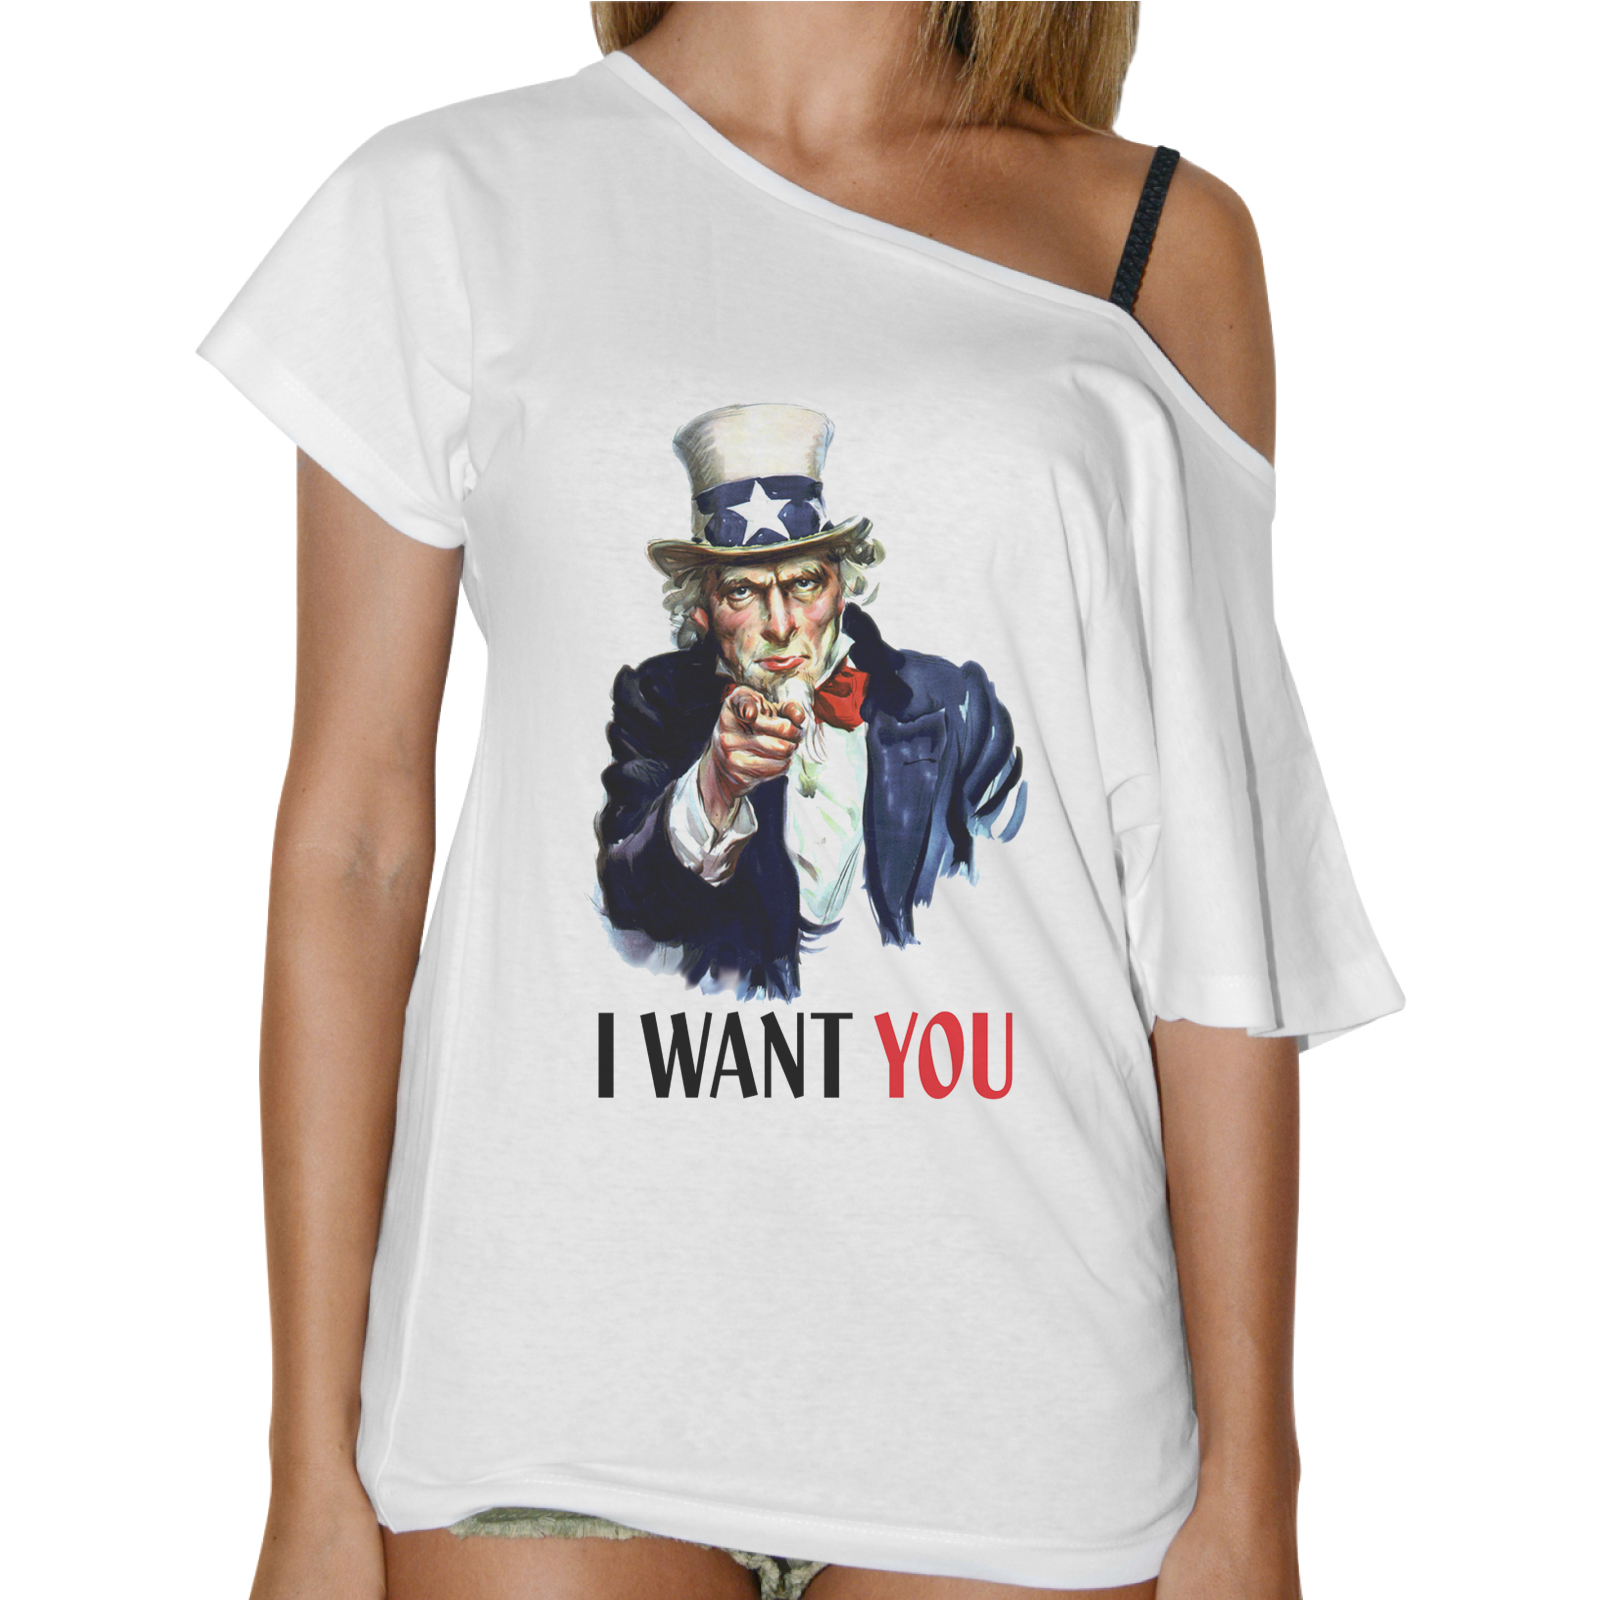 T-Shirt Donna Collo Barca I WANT YOU